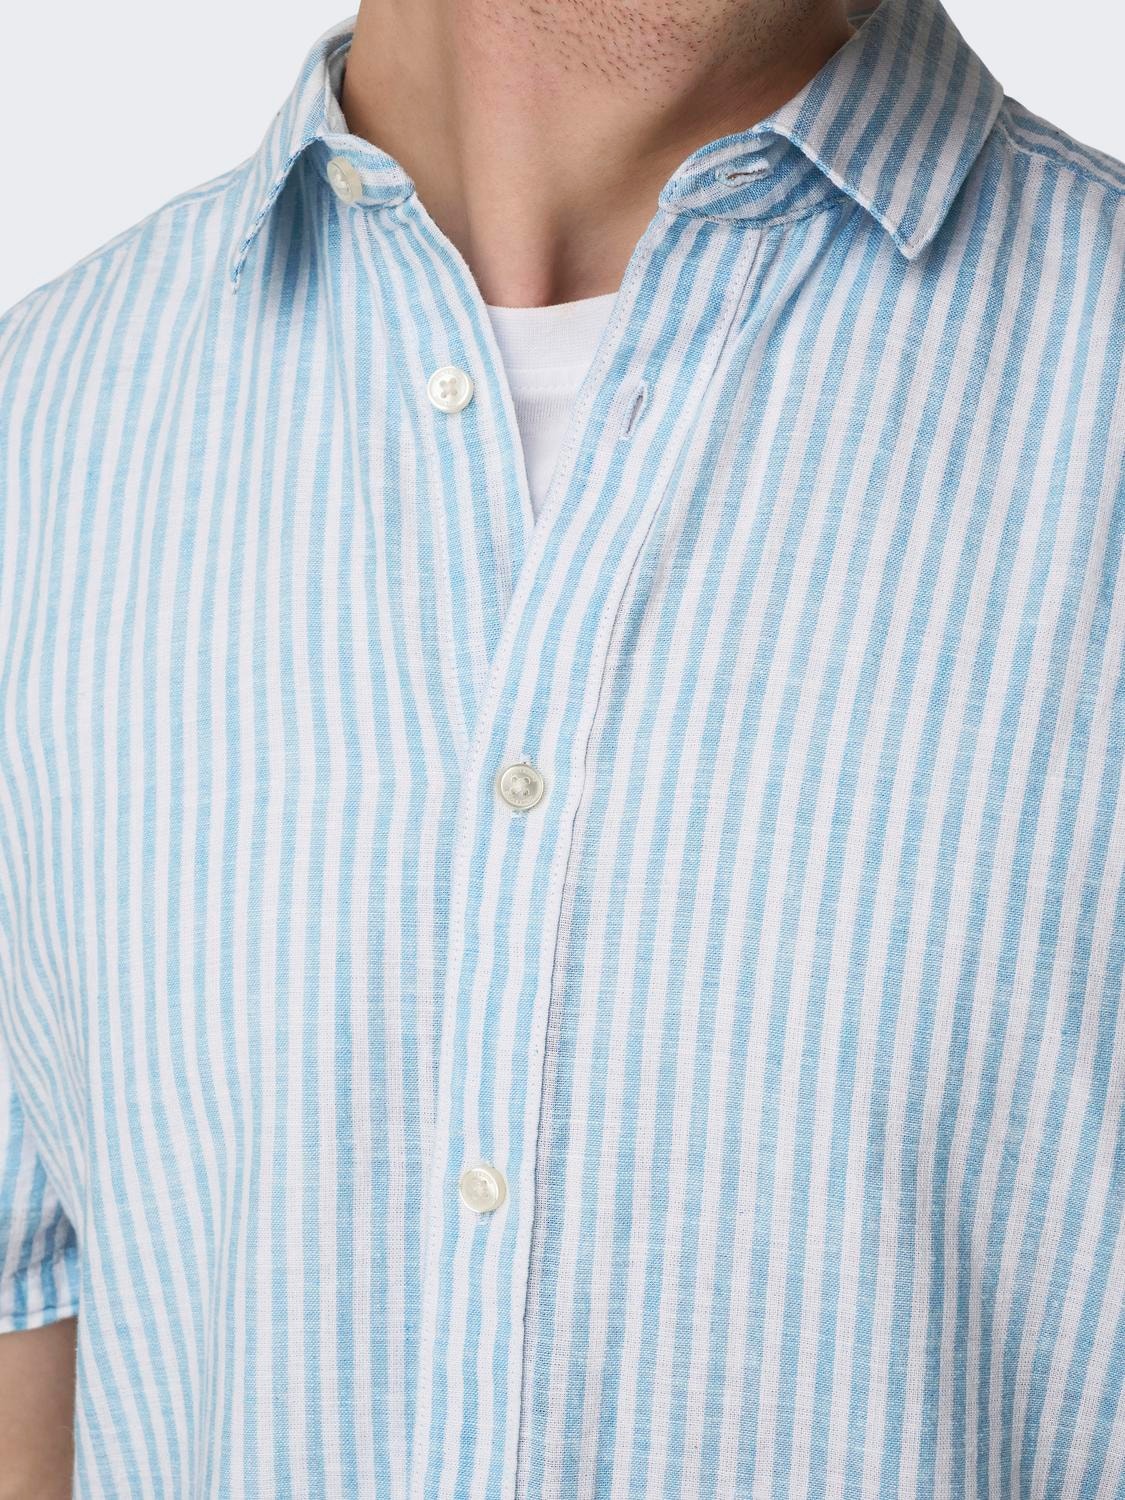 ONLY & SONS Camisas Corte slim Cuello de camisa -Cashmere Blue - 22028416